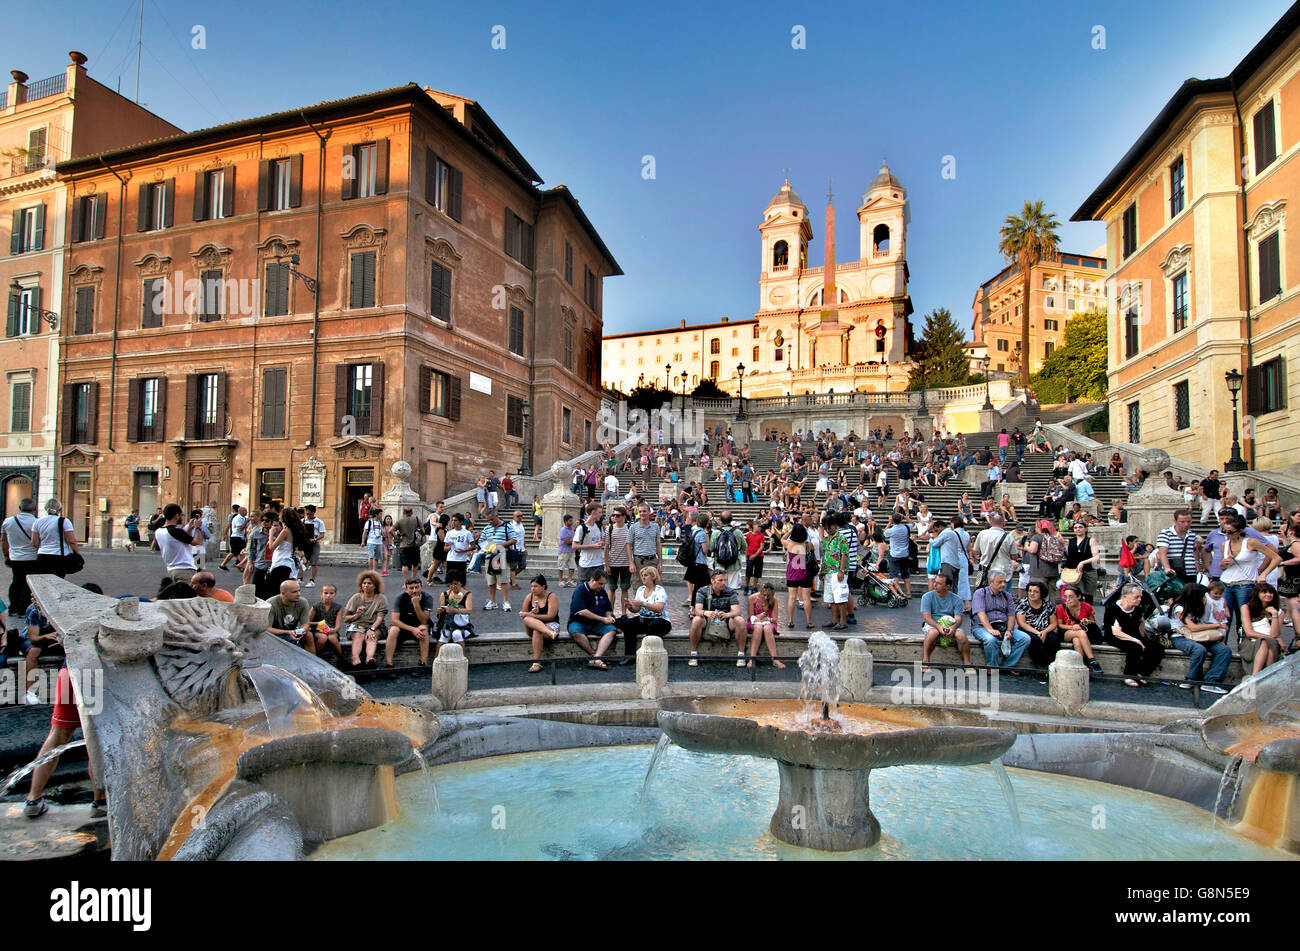 Fontana della Barcaccia fountain and the crowded Spanish Steps, Piazza di Spagna, Rome, Italy, Europe Stock Photo